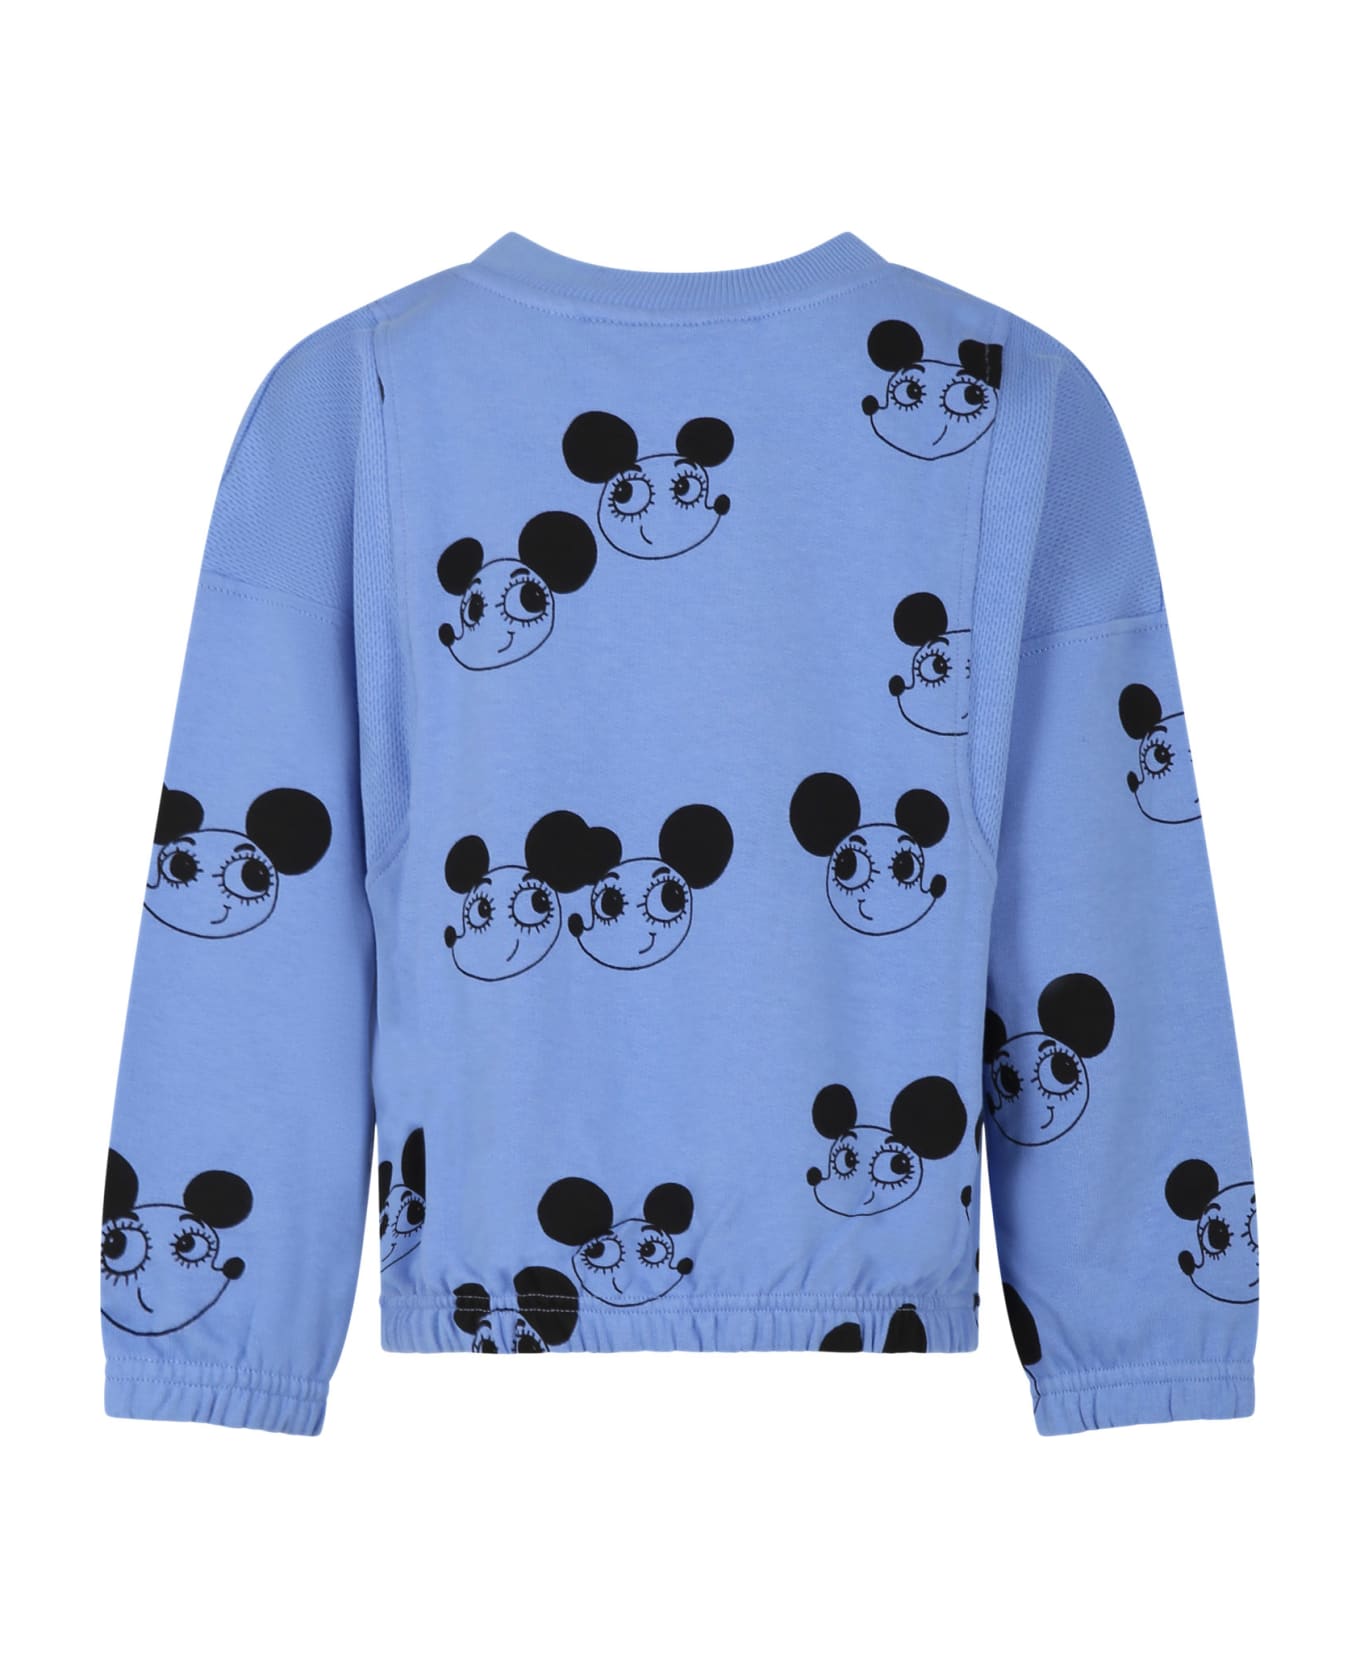 Mini Rodini Light Blue Sweatshirt For Boy With Mice - Light Blue